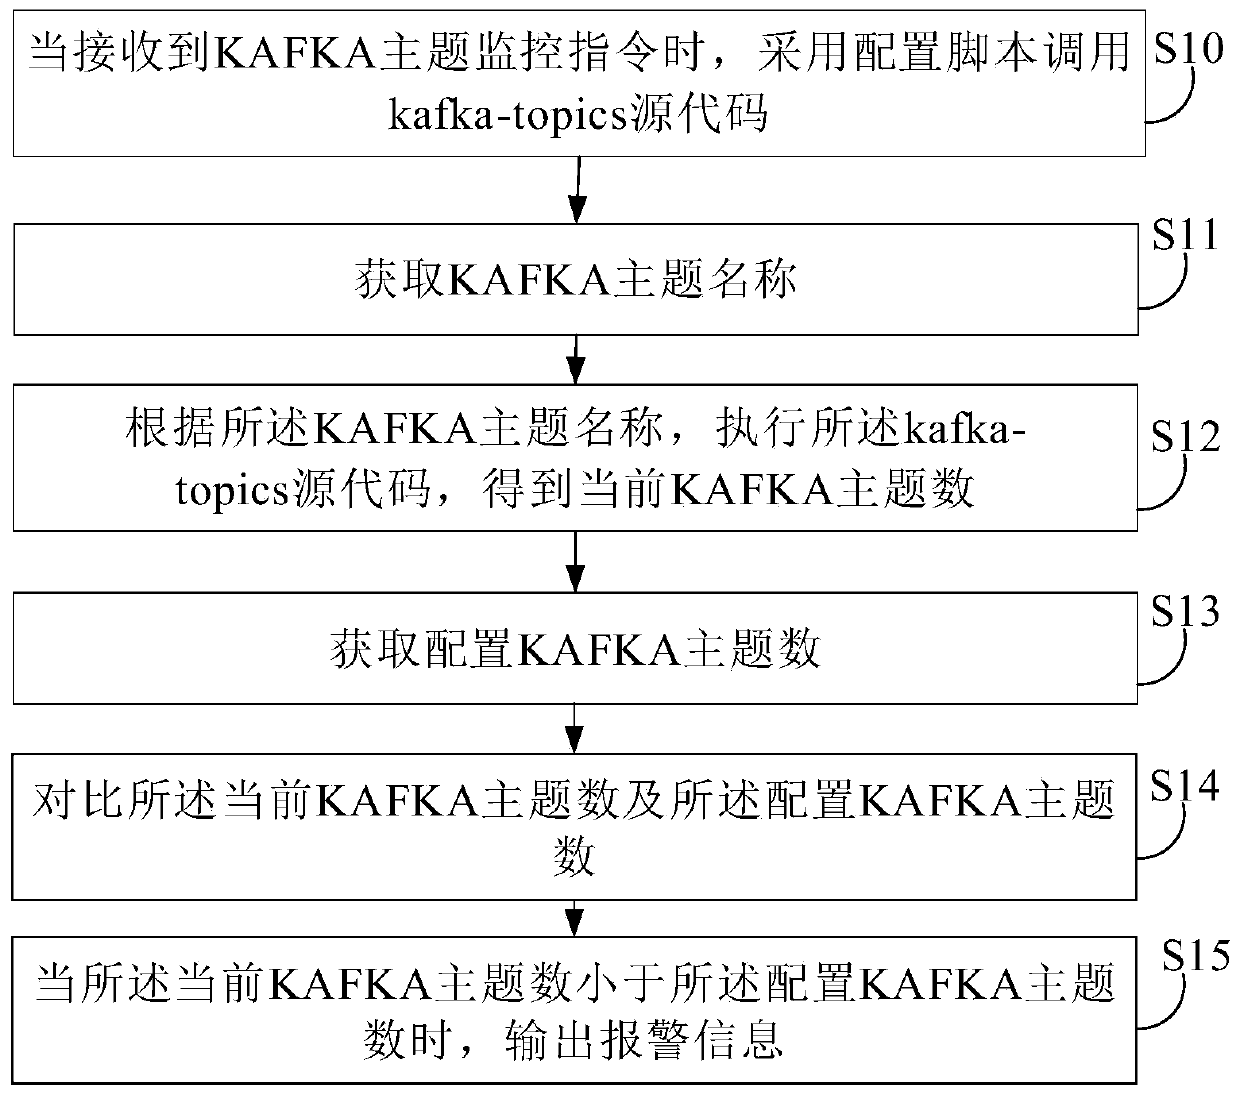 KAFKA theme monitoring method and device, electronic equipment and storage medium